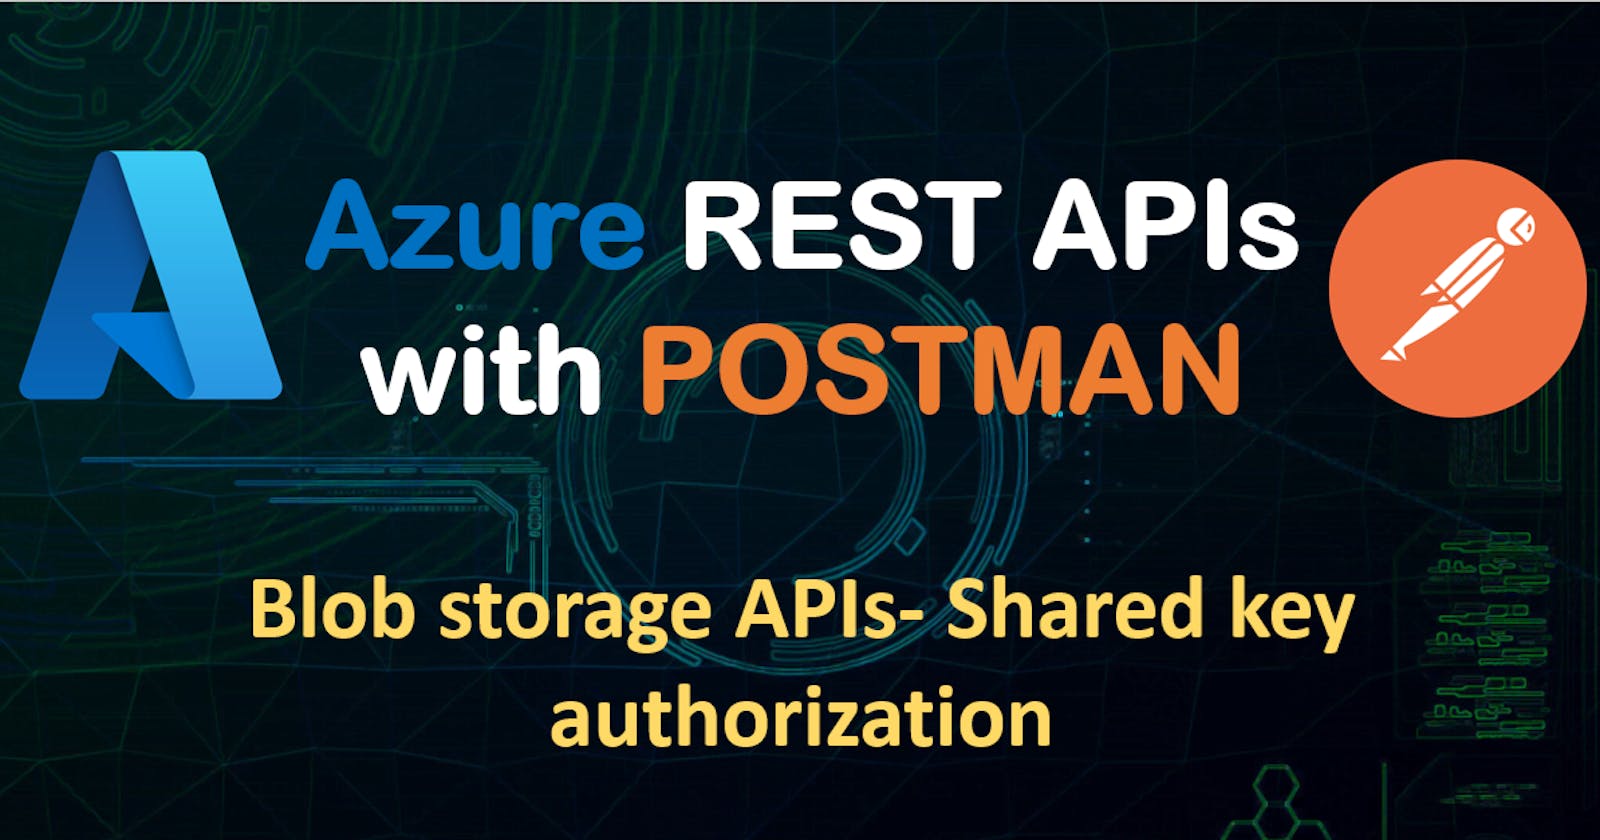 Azure blob storage - upload blob using REST API and shared key authorization header in postman